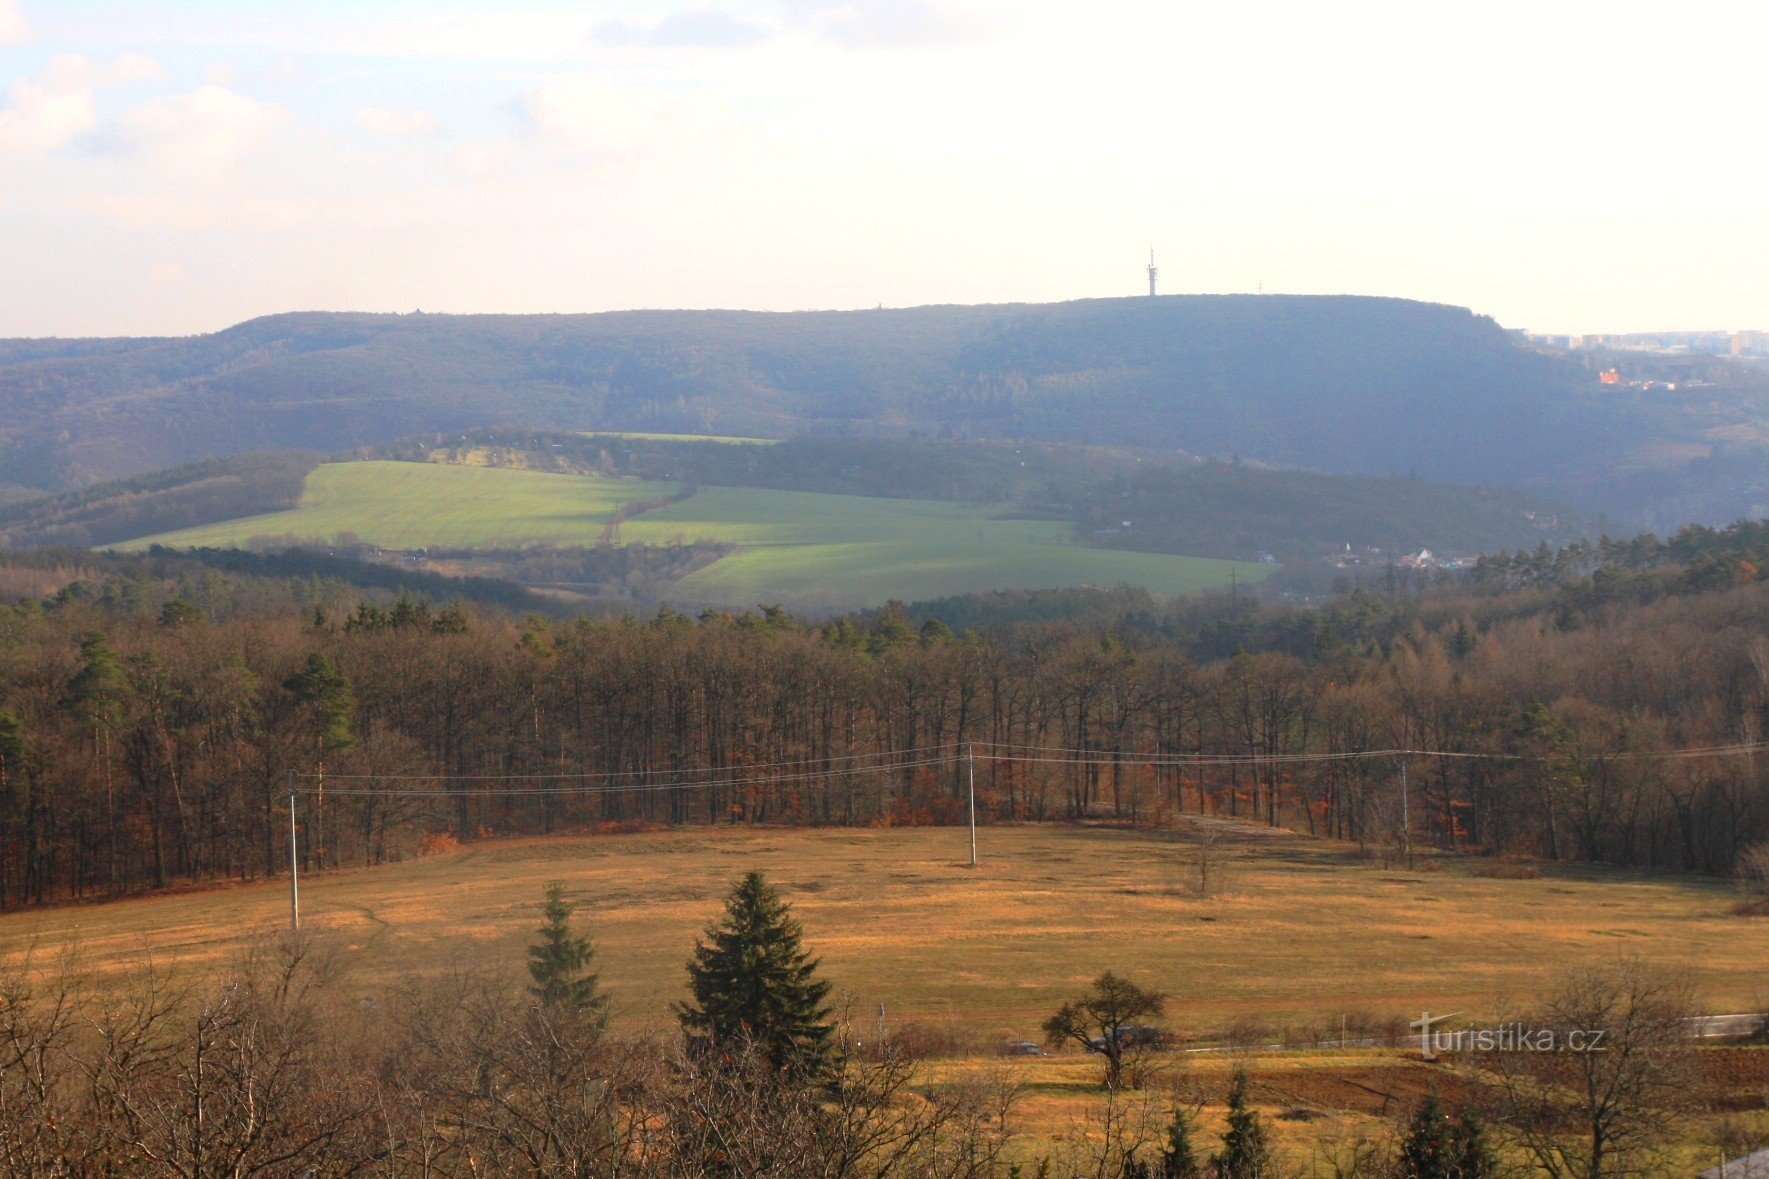 Bílovice nad Svitavou の上部から見たハーディ カルスト台地